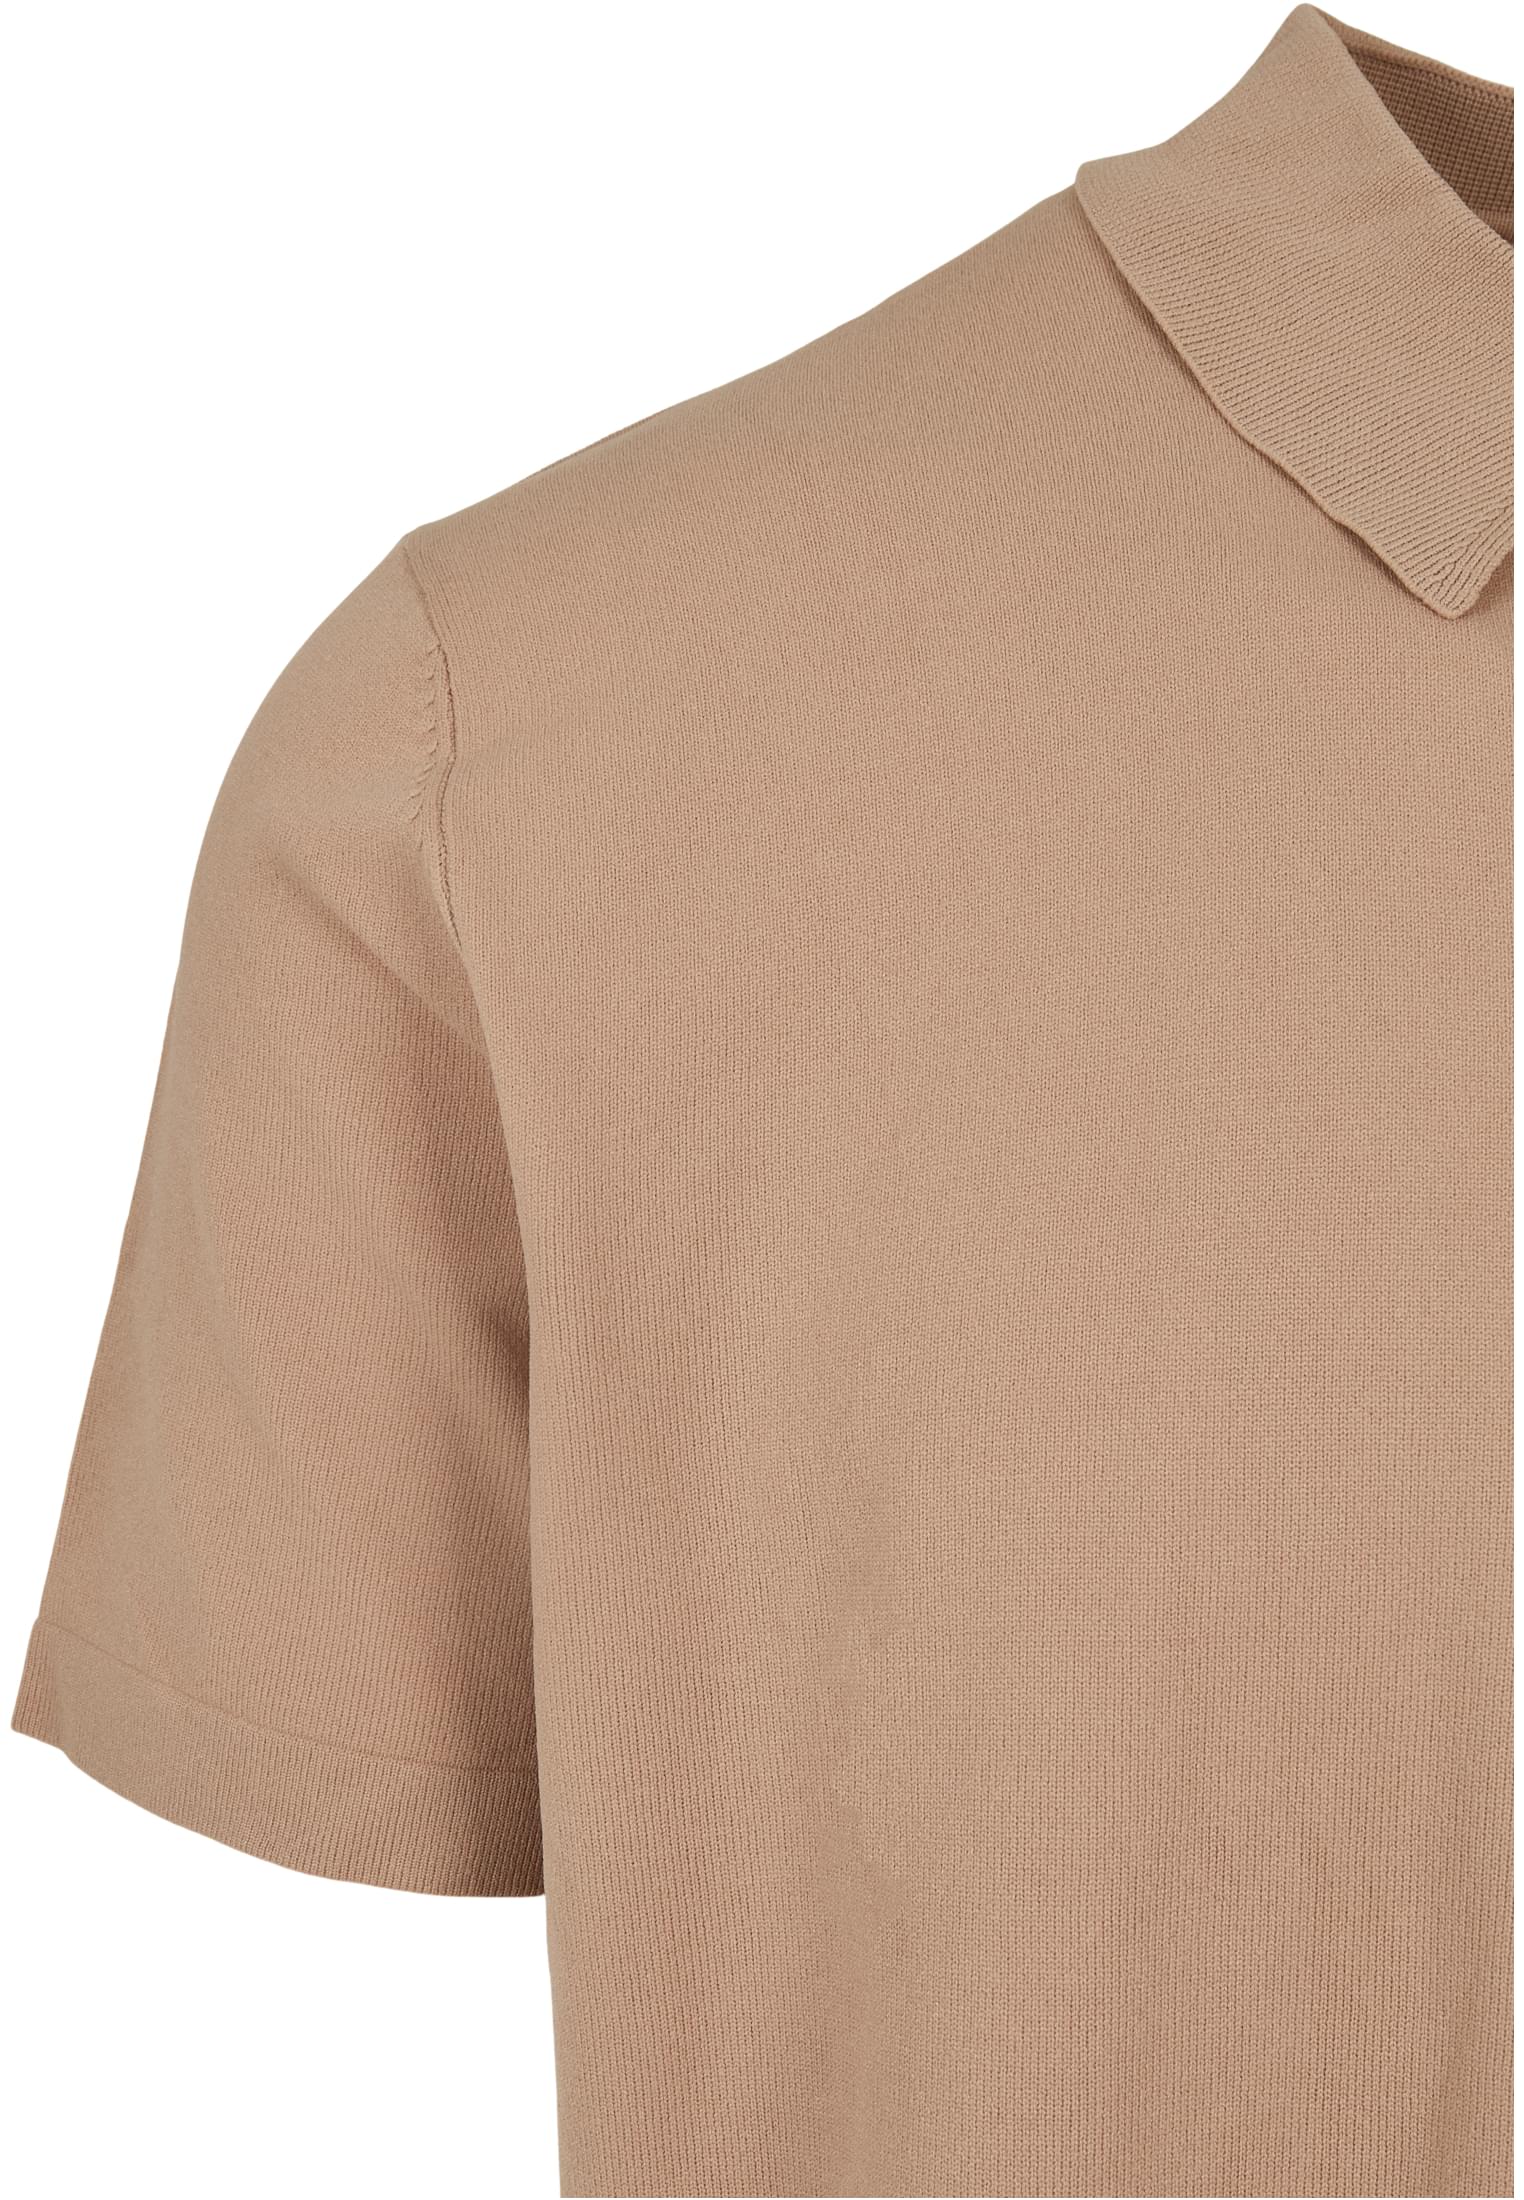 Hemden Knitted Shirt in Farbe unionbeige